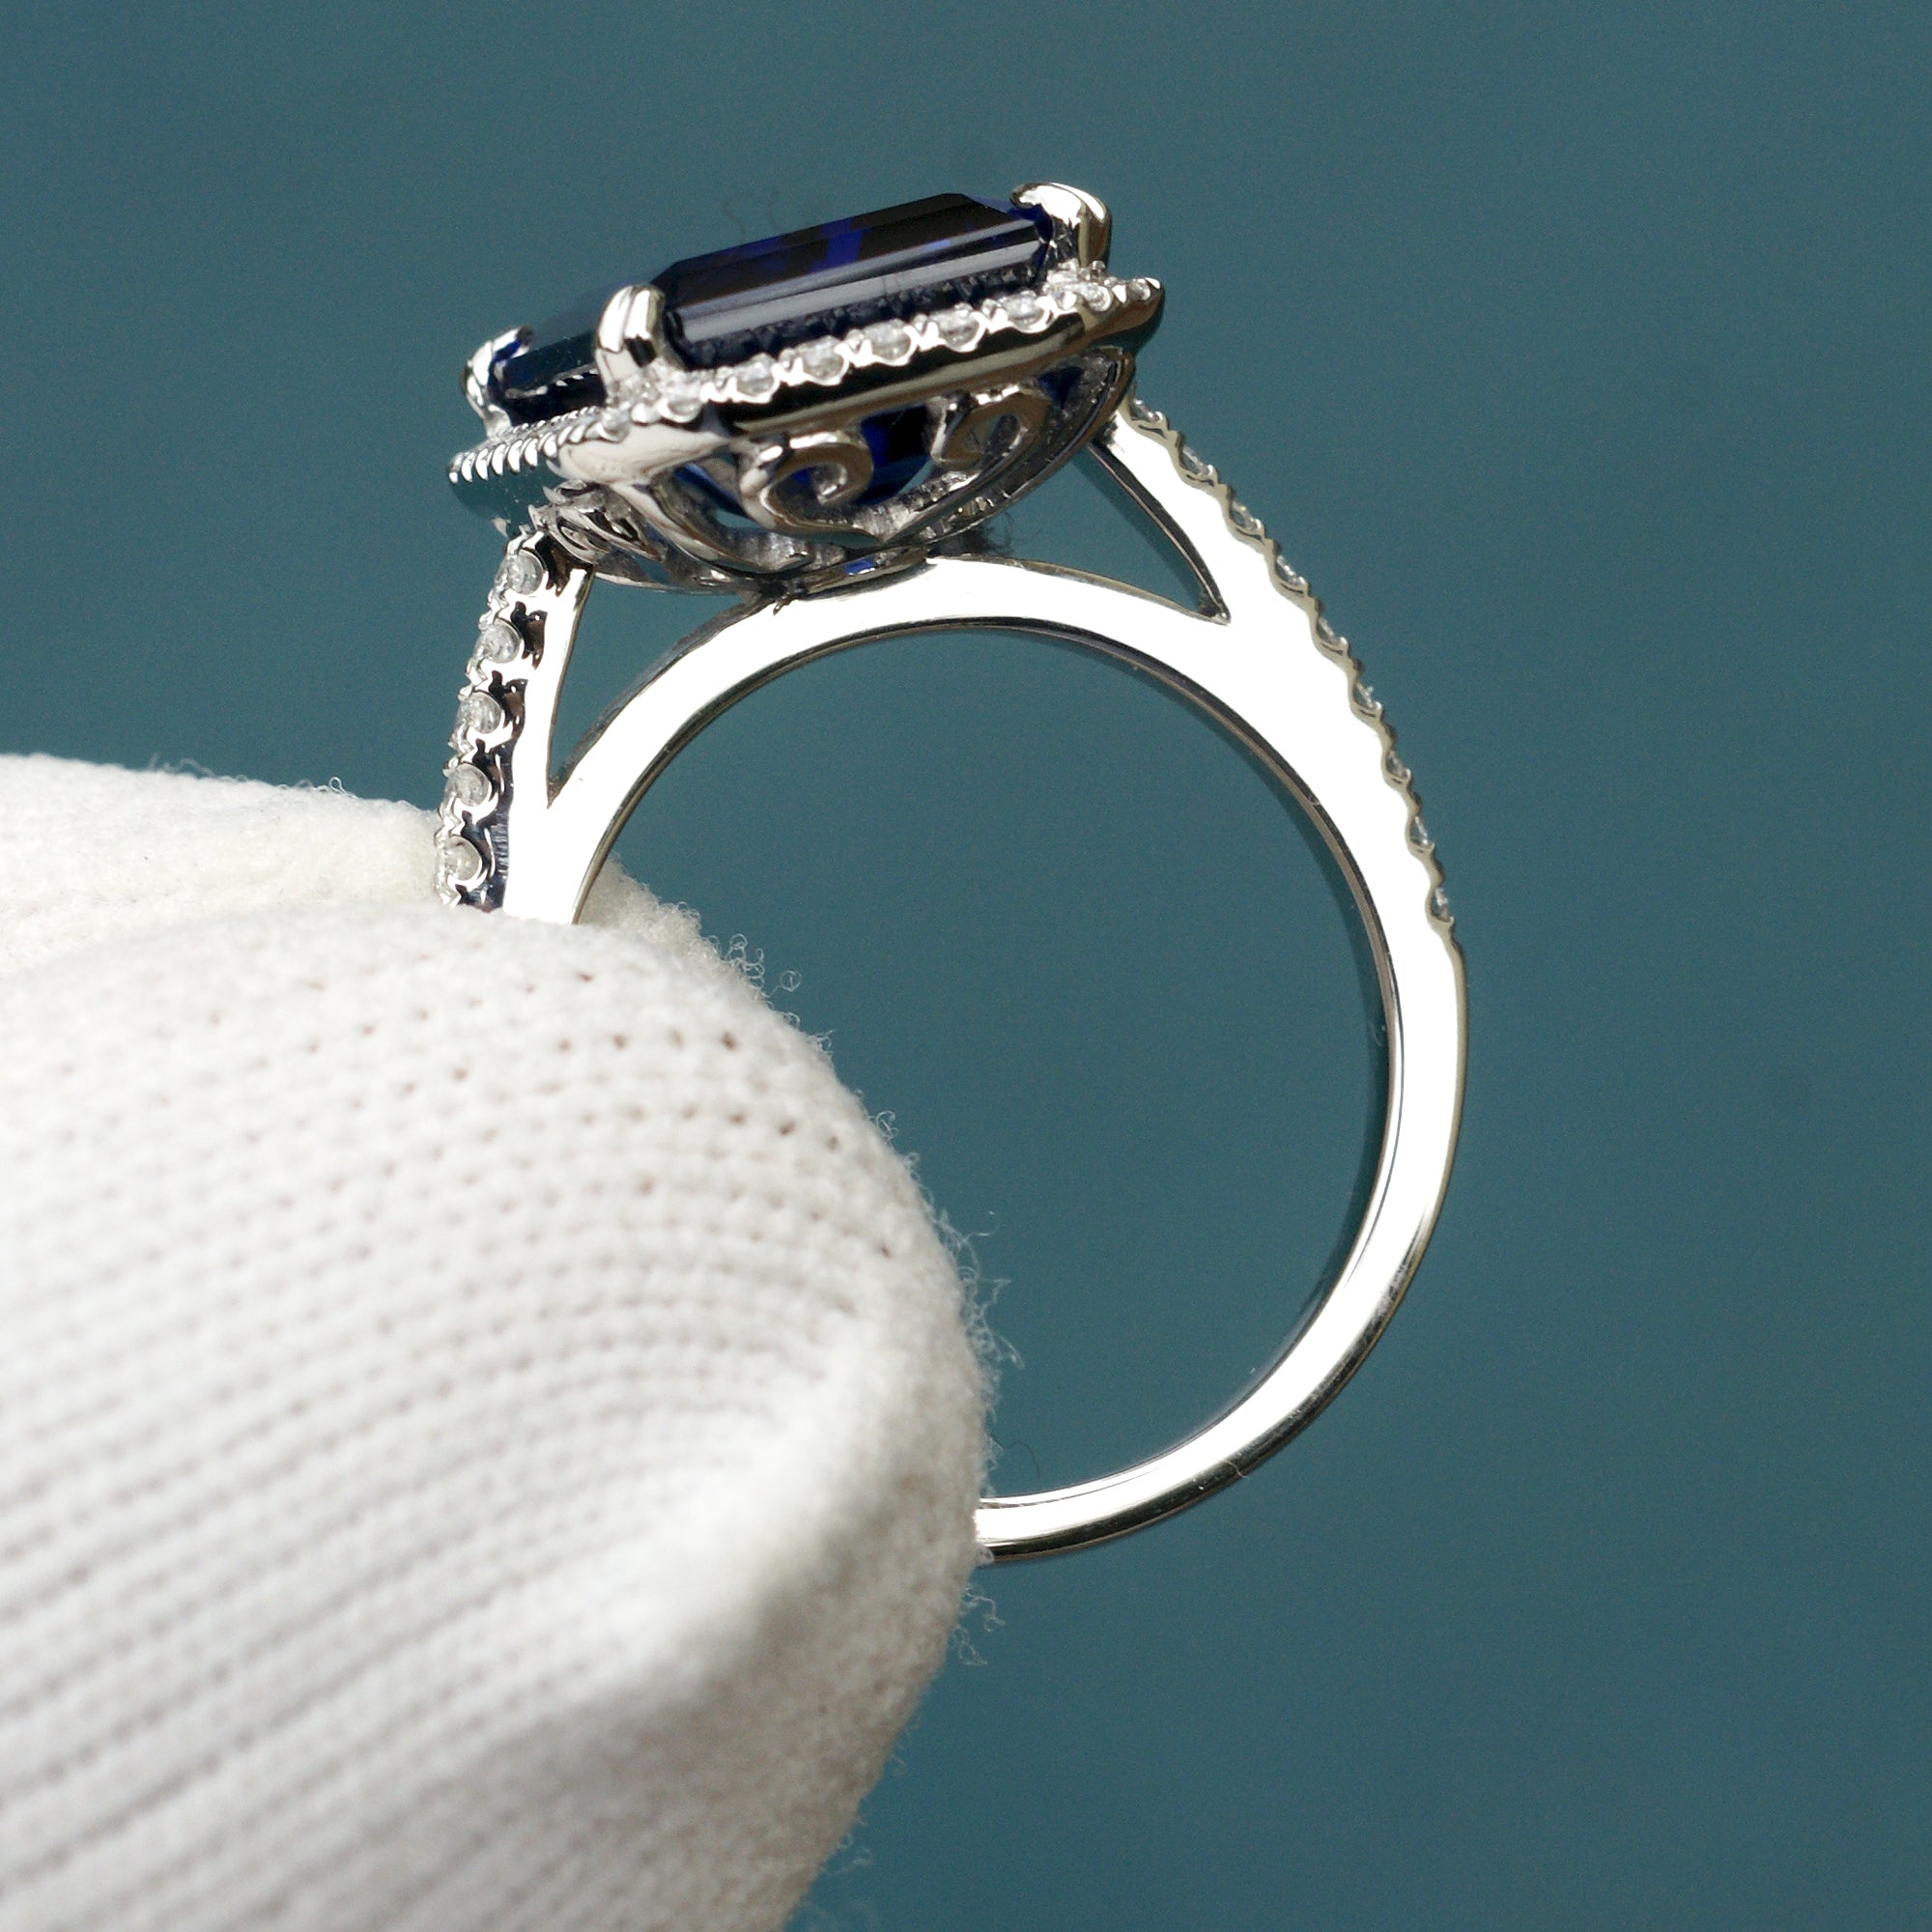 Blue sapphire emerald cut diamond halo and band wedding engagement ring set